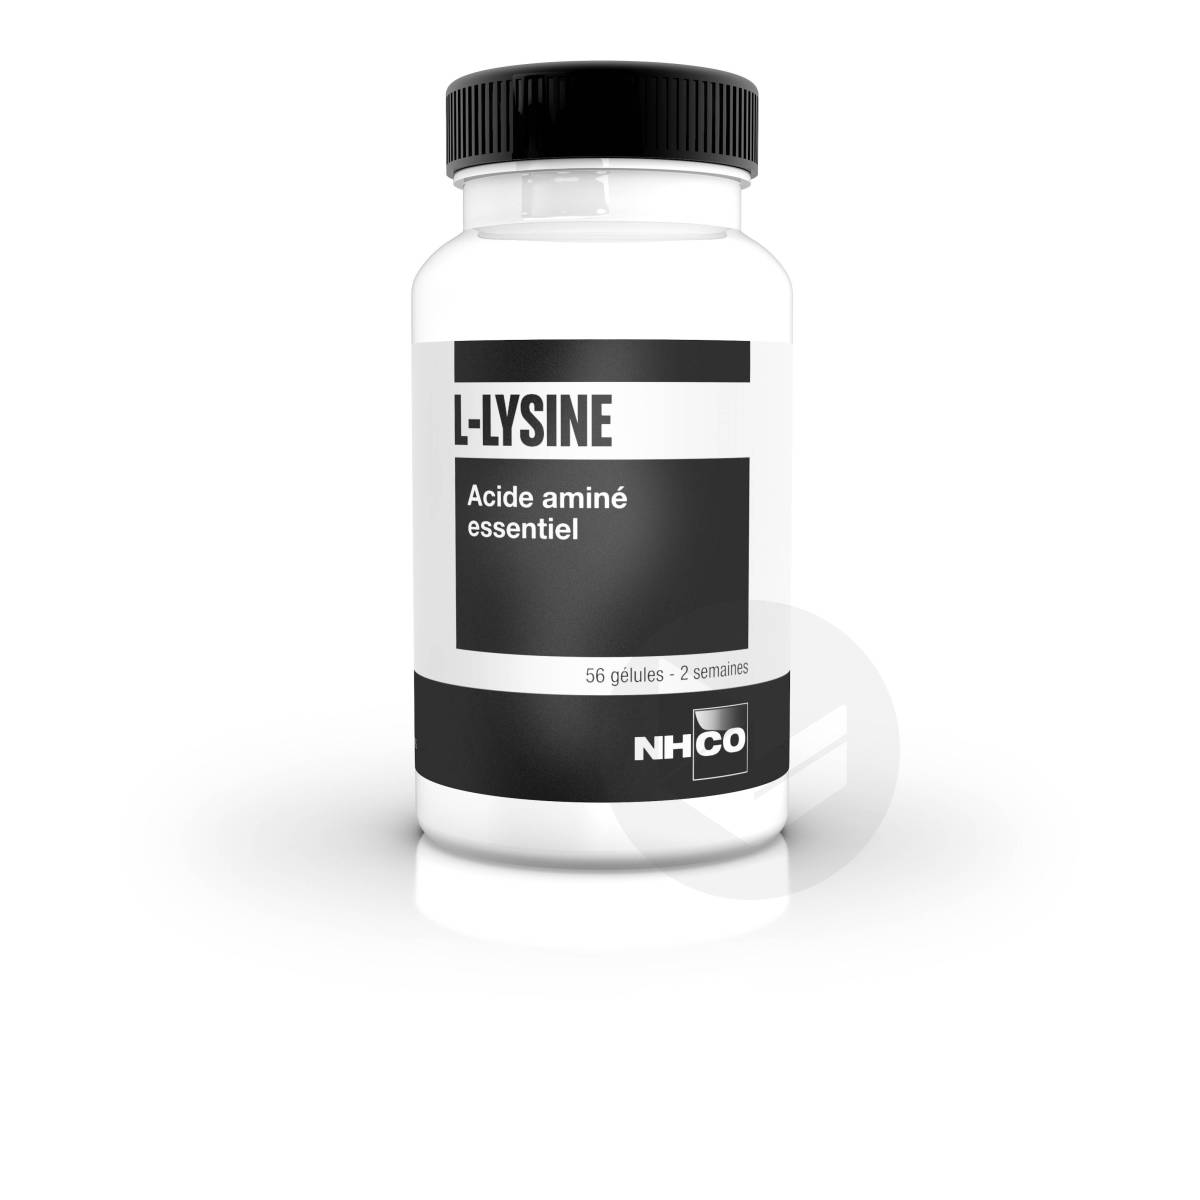 L-lysine 56 Gélules